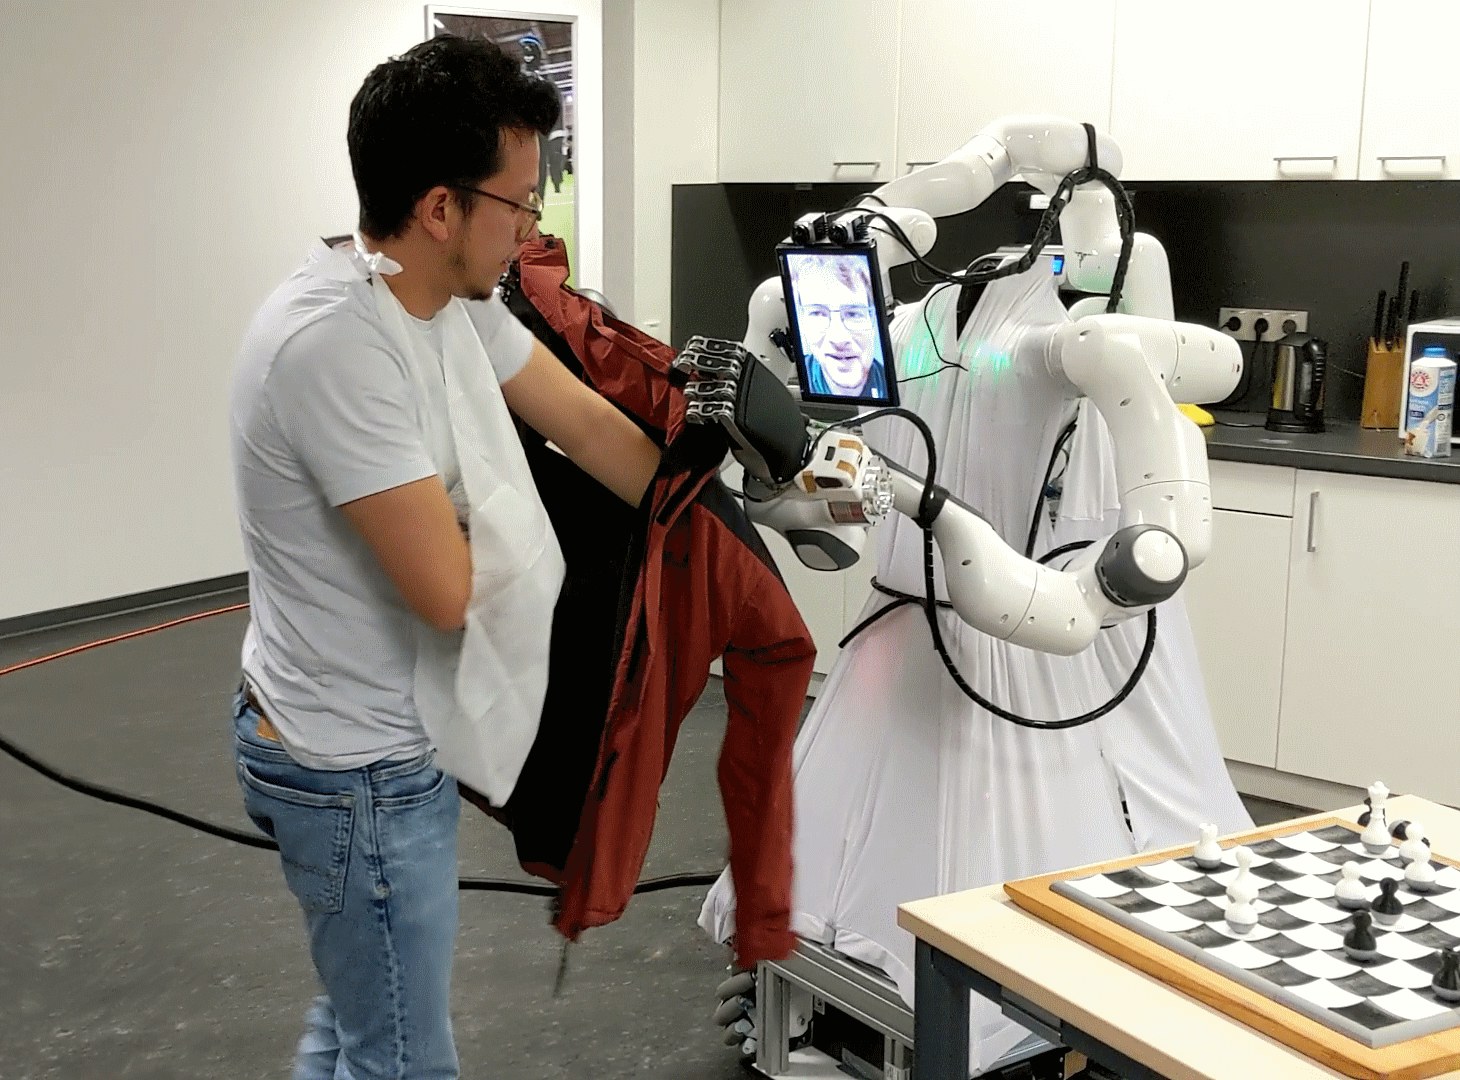 An assistance robot from the University of Bonn